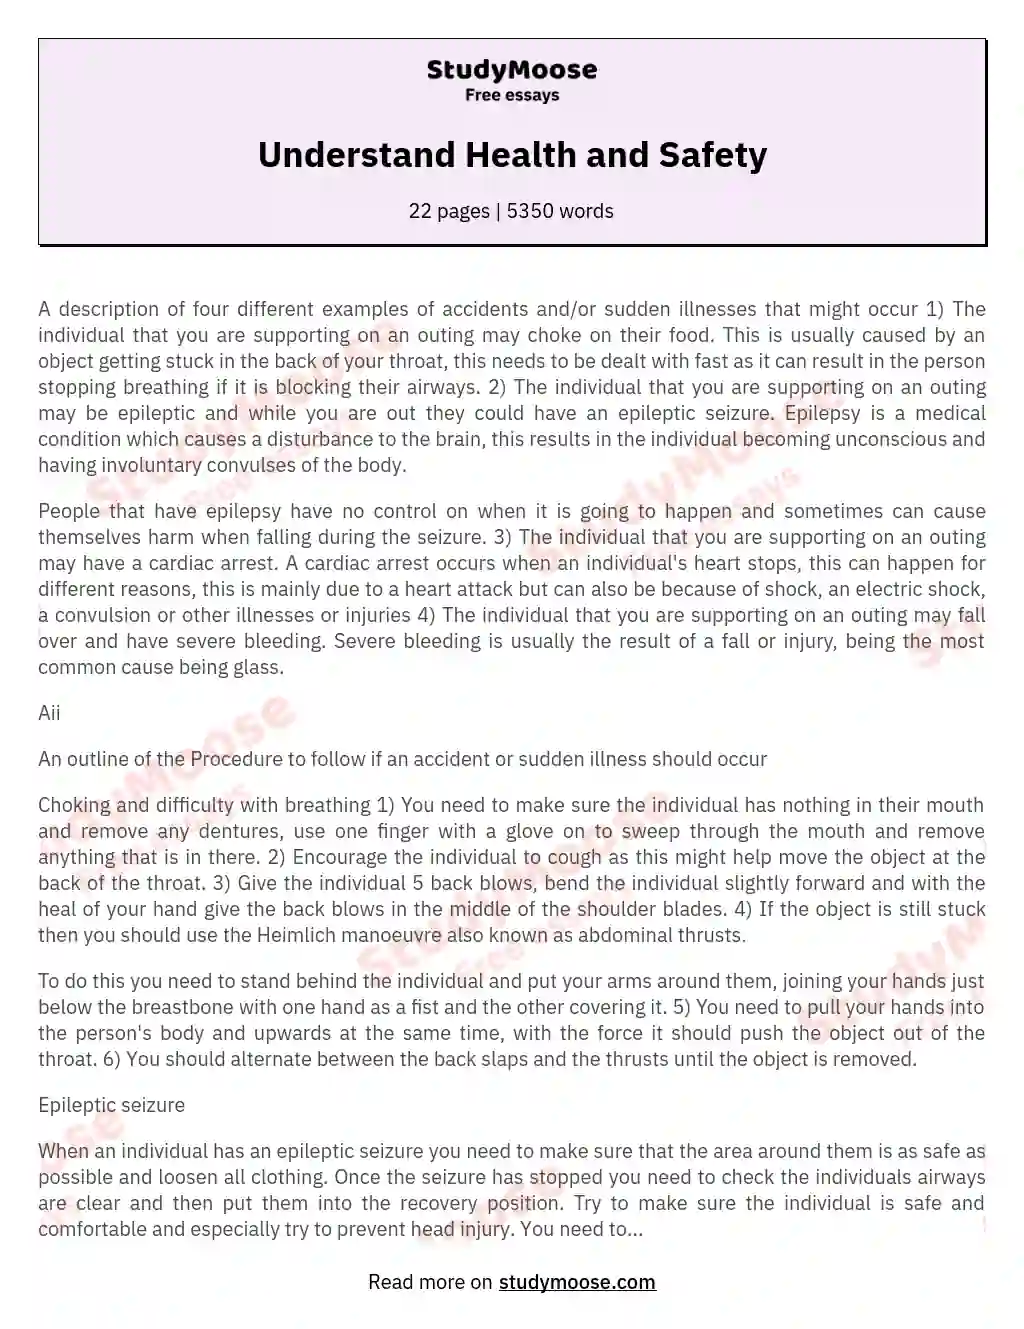 Understand Health and Safety essay